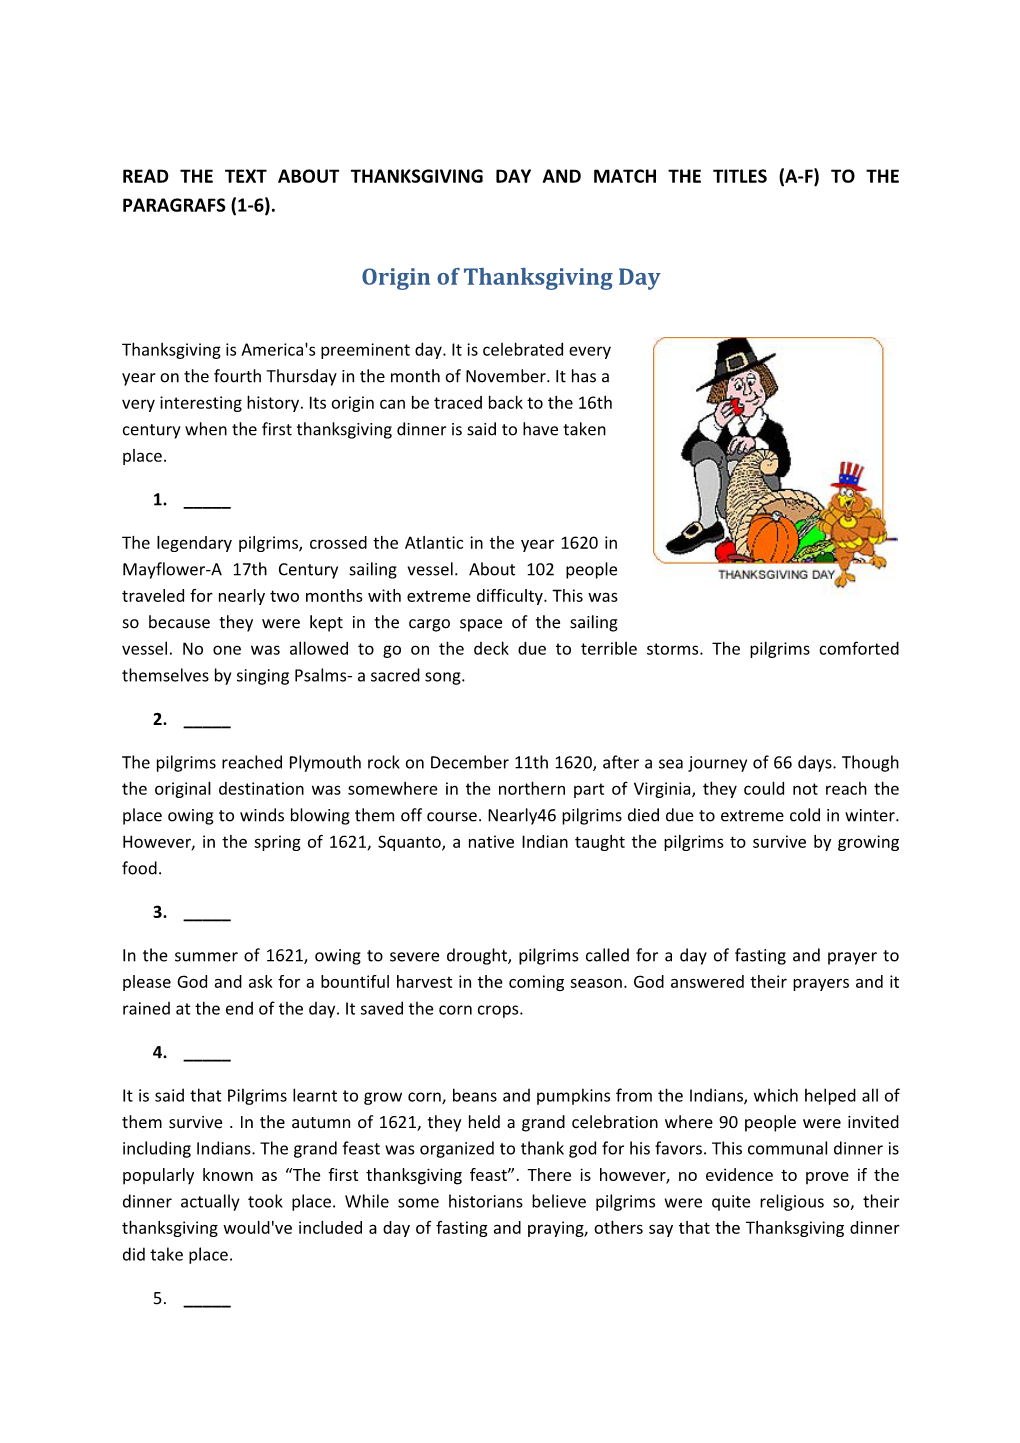 Origin of Thanksgiving Day